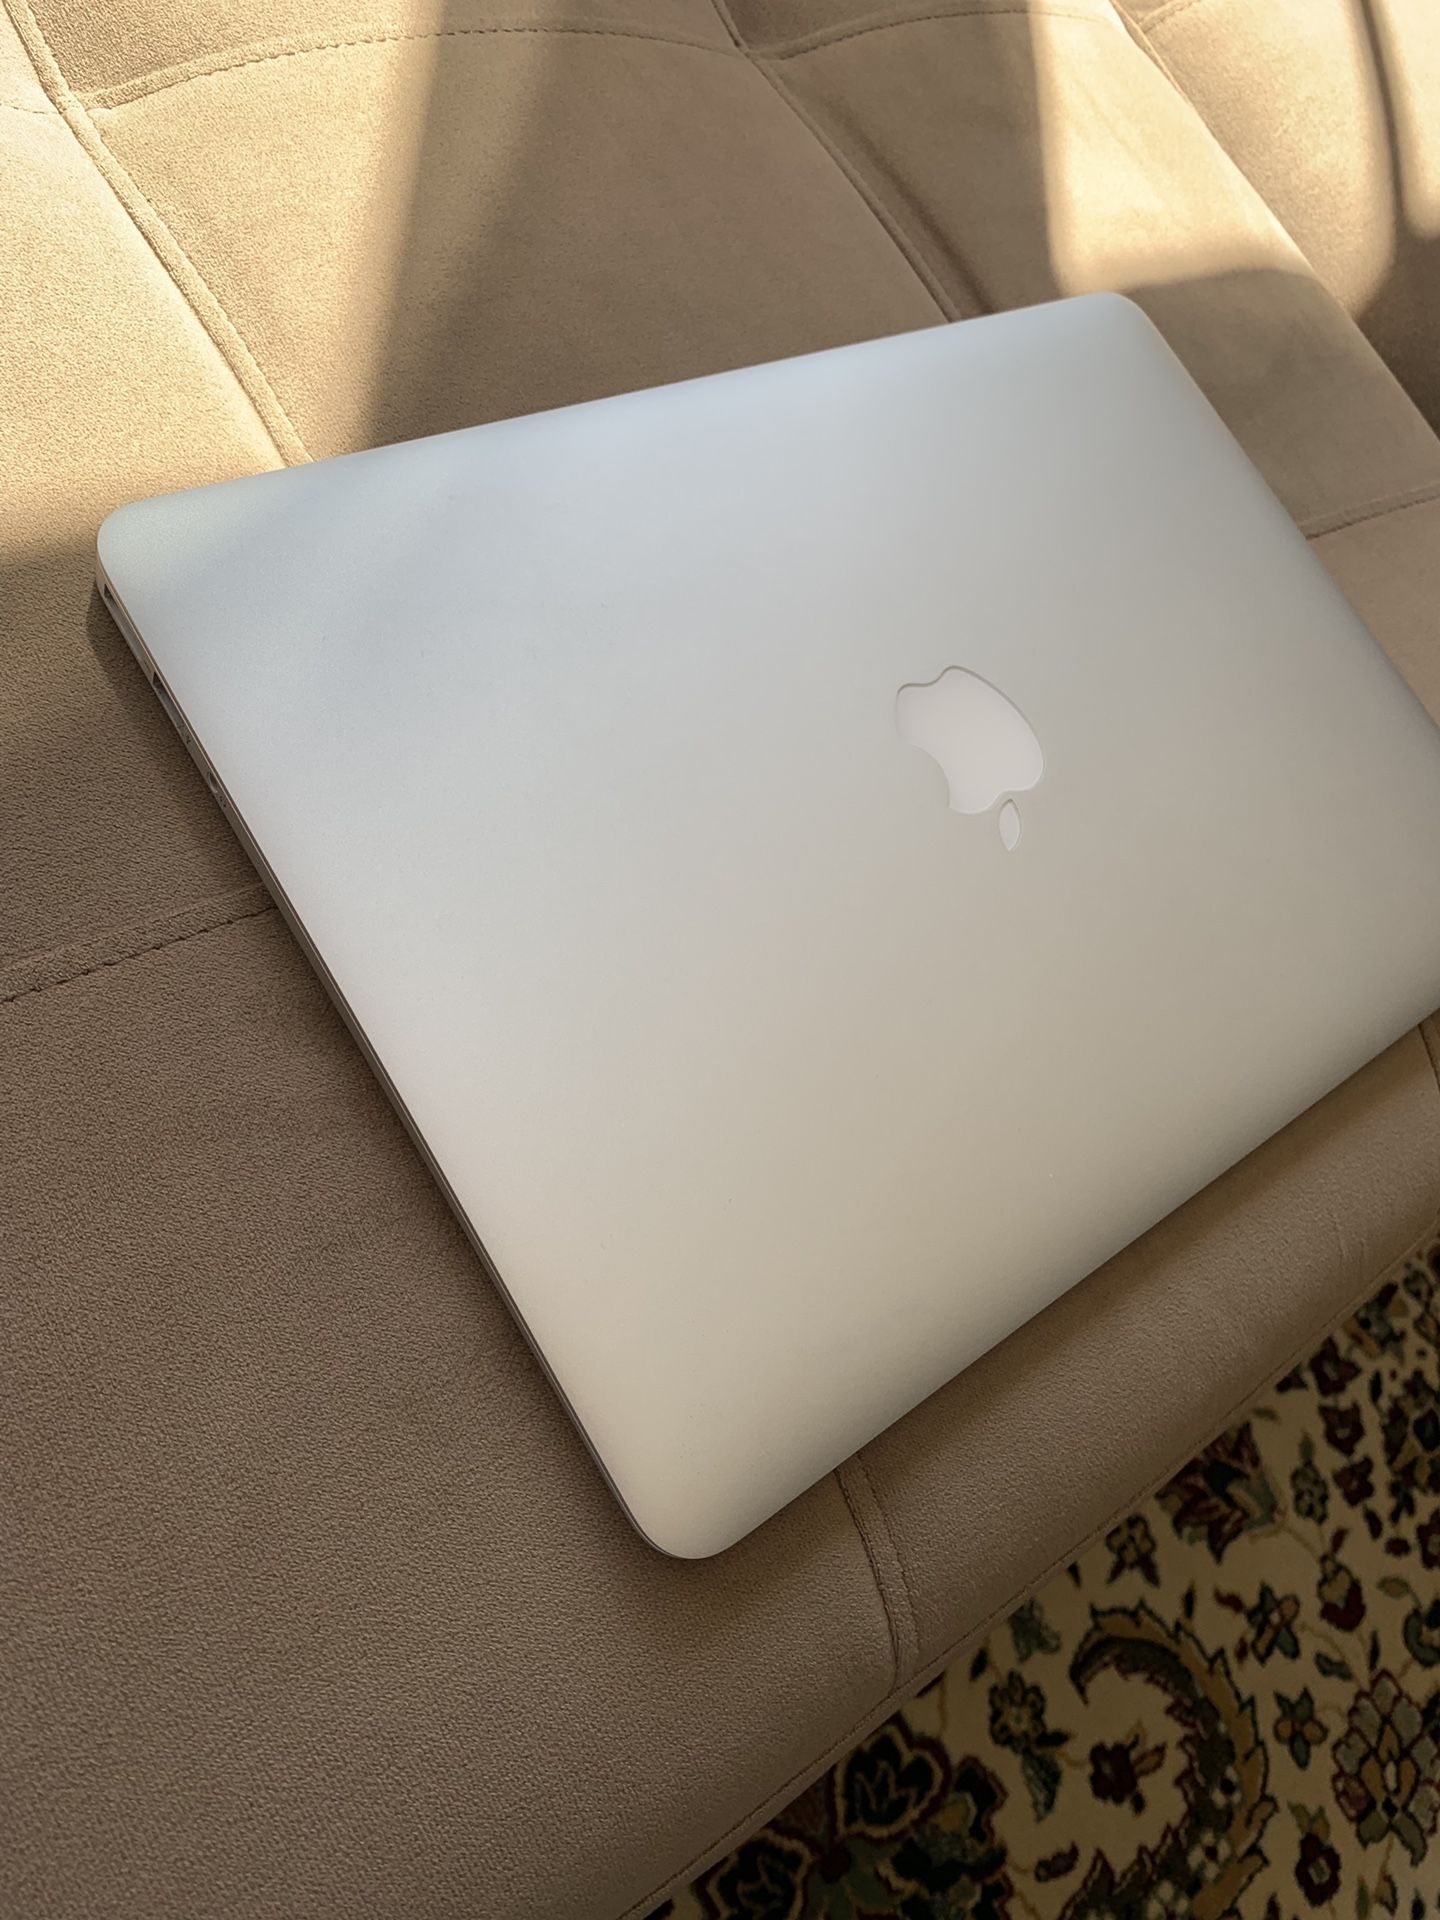 Apple MacBook Air 2017 13 inch